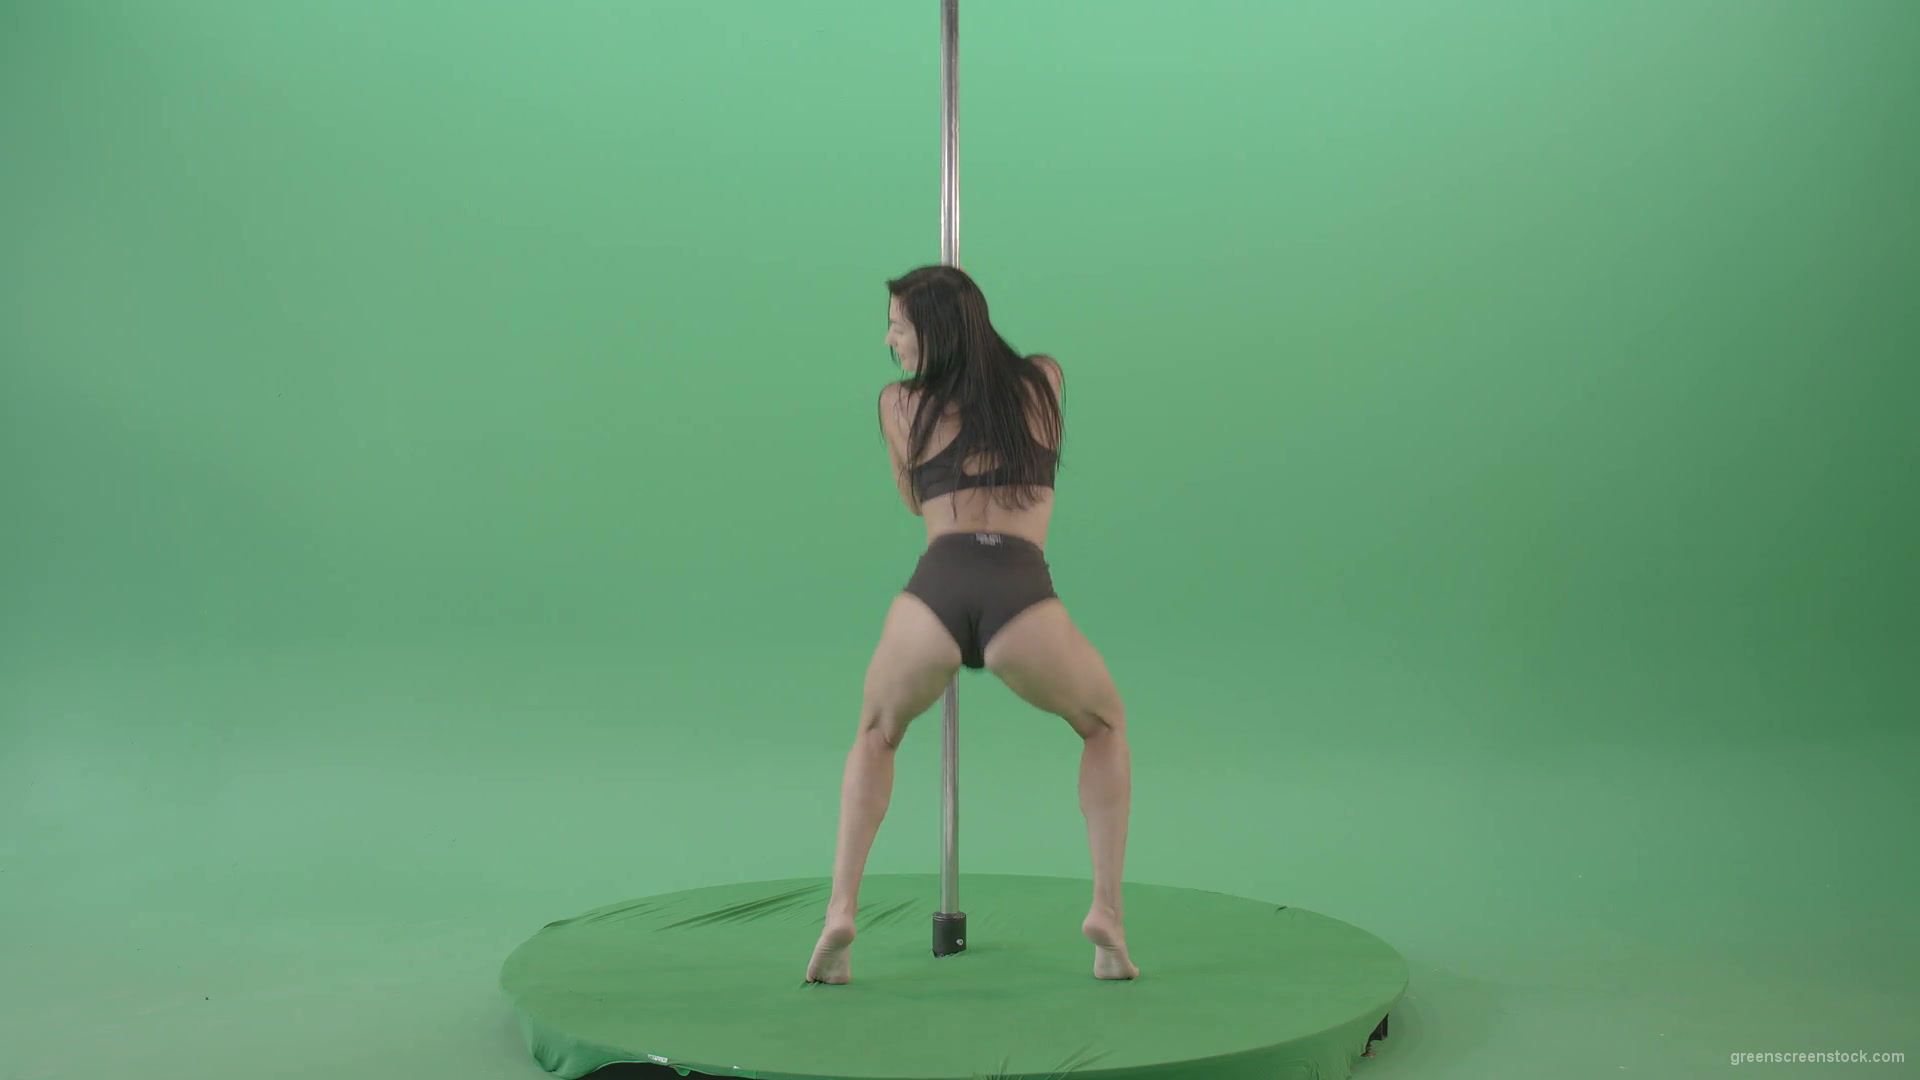 Brunette-Strip-Model-Girl-has-fun-on-dancing-pole-isolated-on-Green-Screen-4K-Video-Footage-1920_007 Green Screen Stock